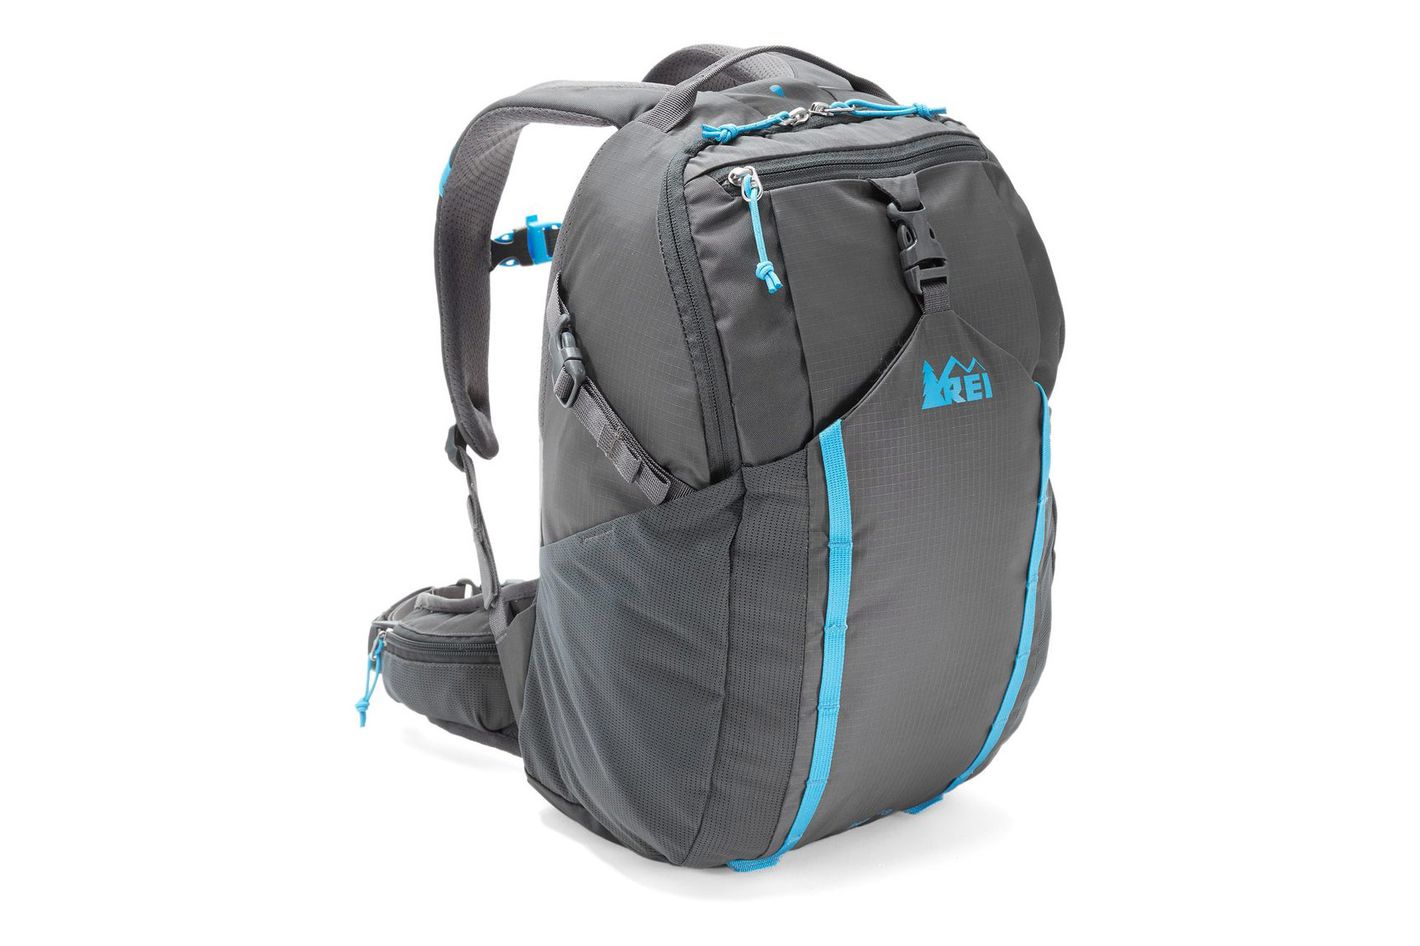 ergonomic backpack reviews